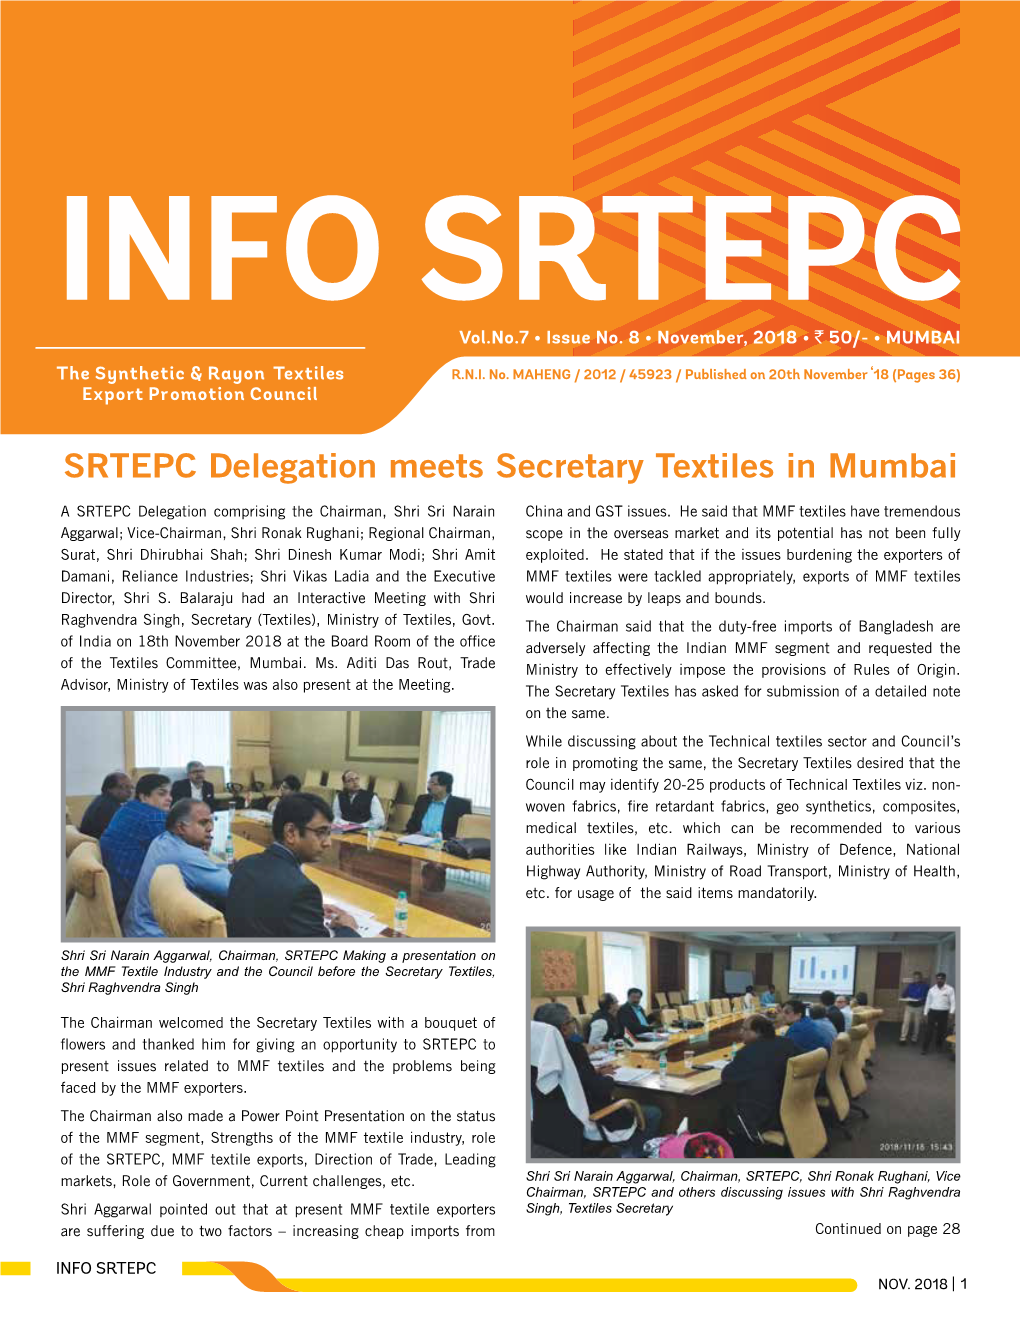 SRTEPC Delegation Meets Secretary Textiles in Mumbai